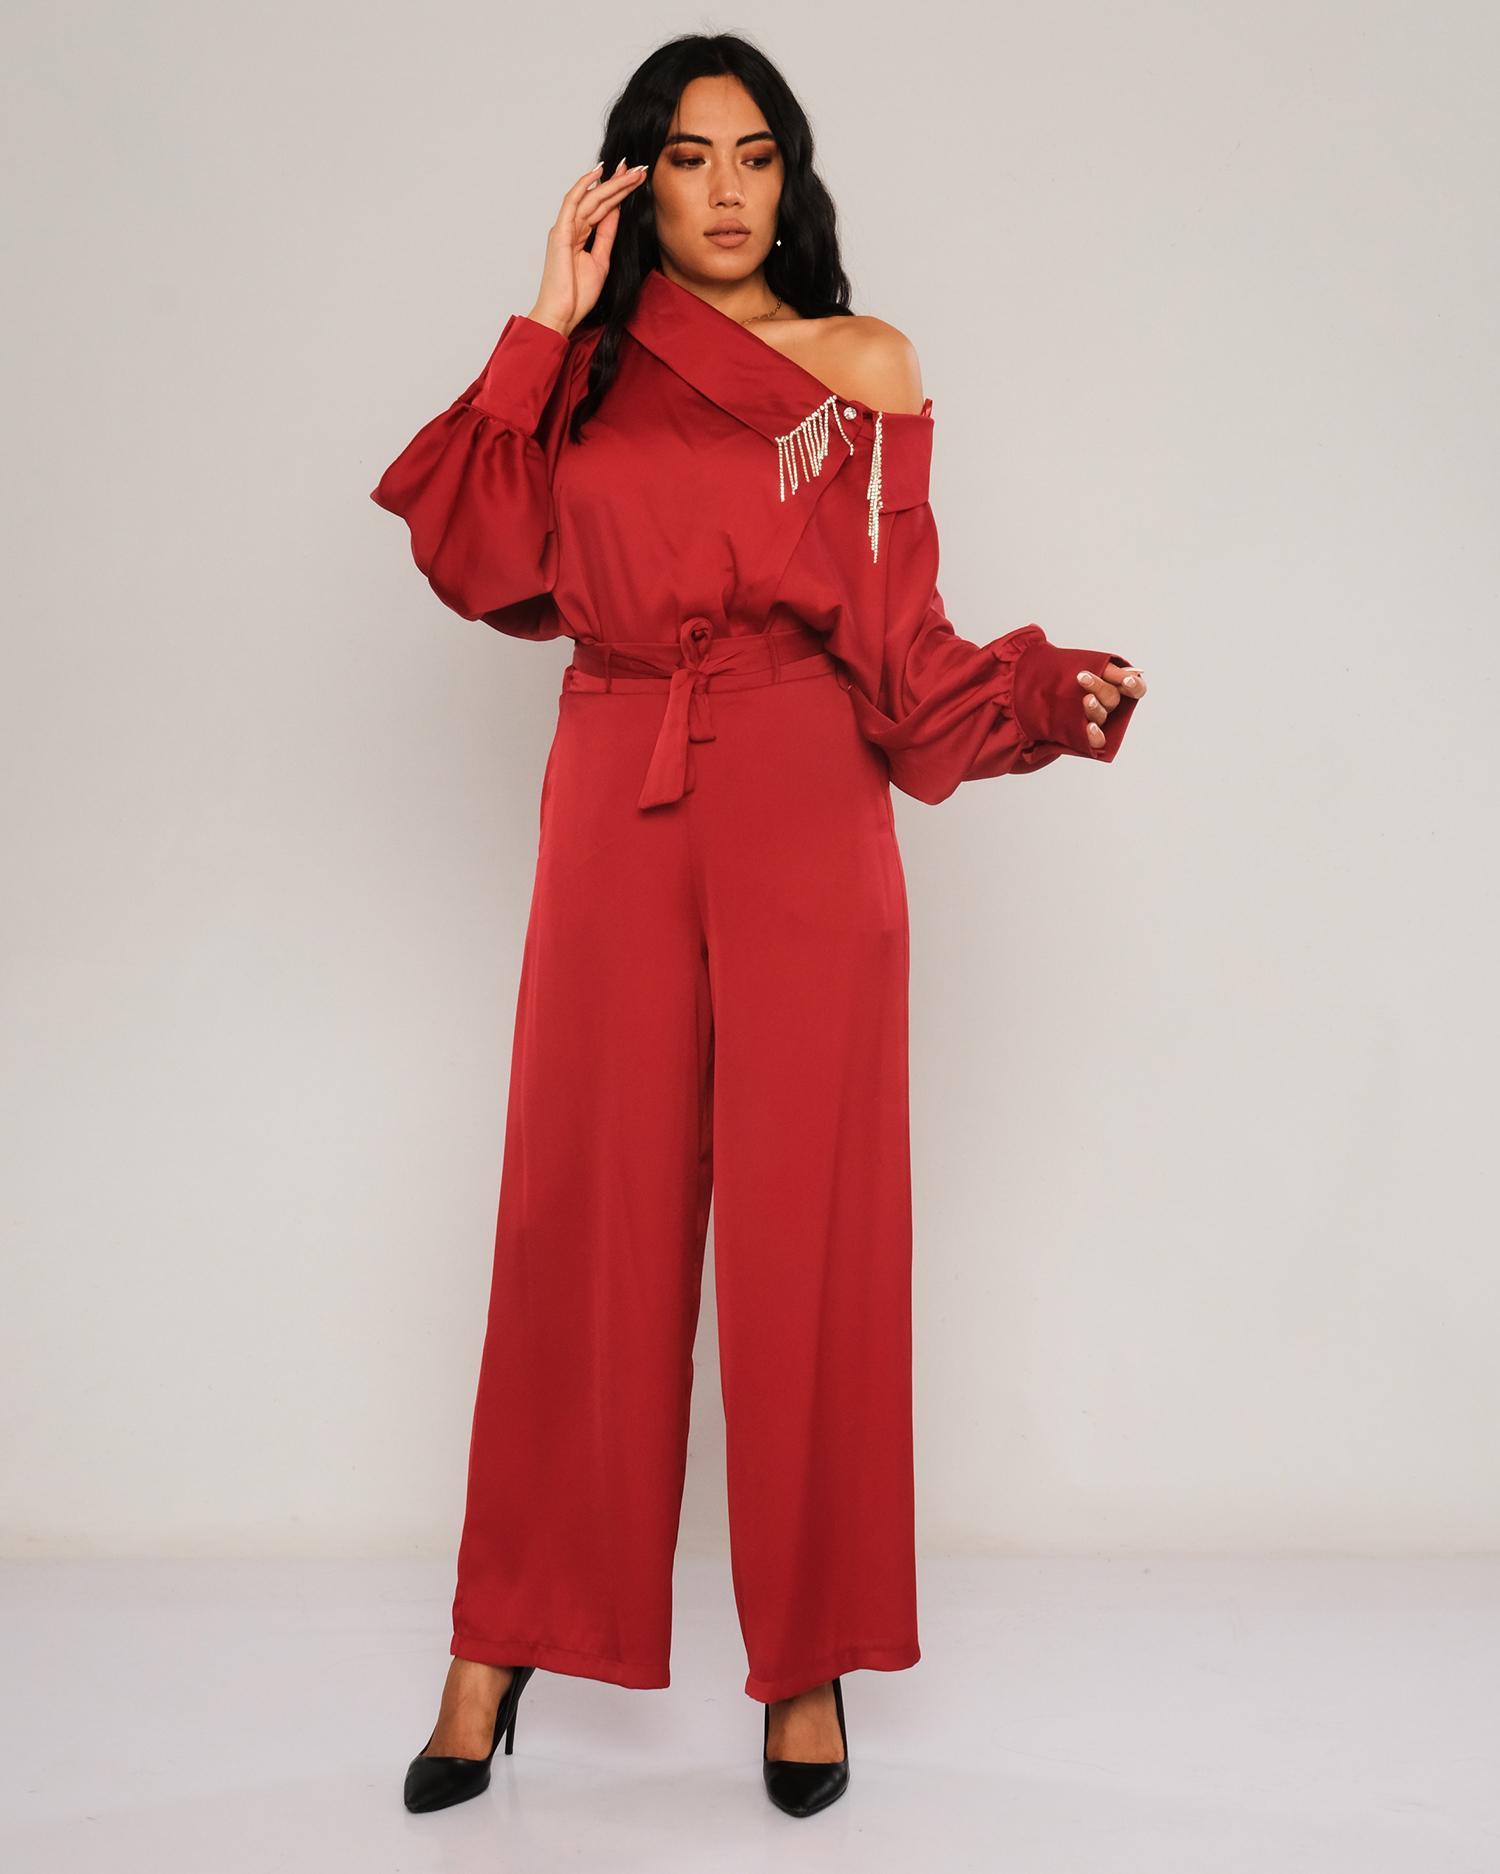 Lila Rose Casual Suits|Fimkastore.com: Online Shopping Wholesale Womens ...